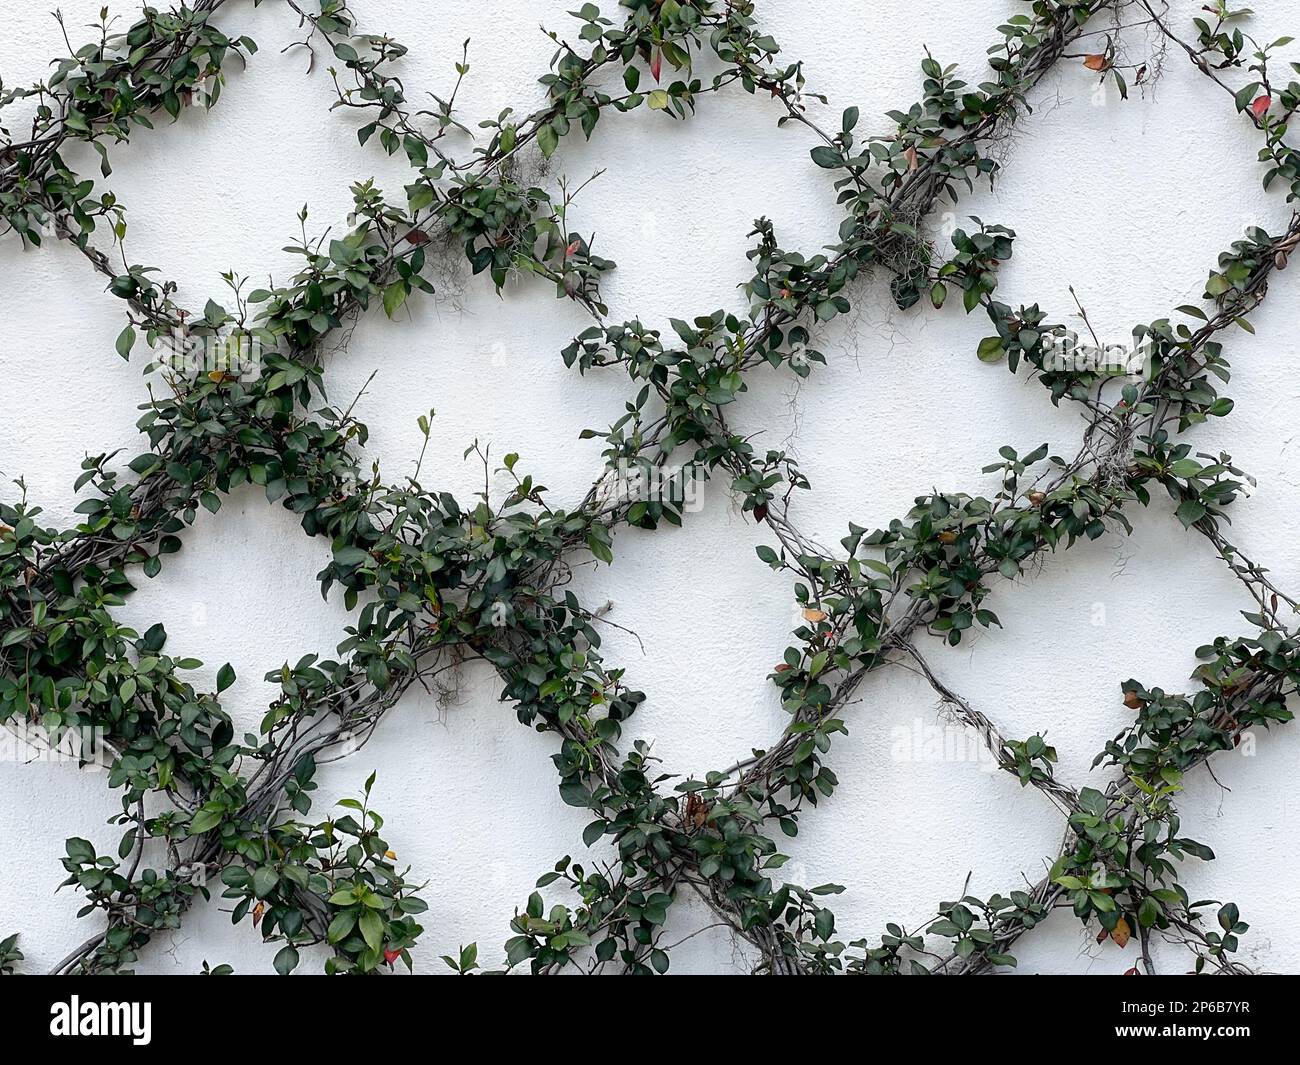 Ivy growing on a trellis creates a geometric diamond pattern Stock Photo -  Alamy